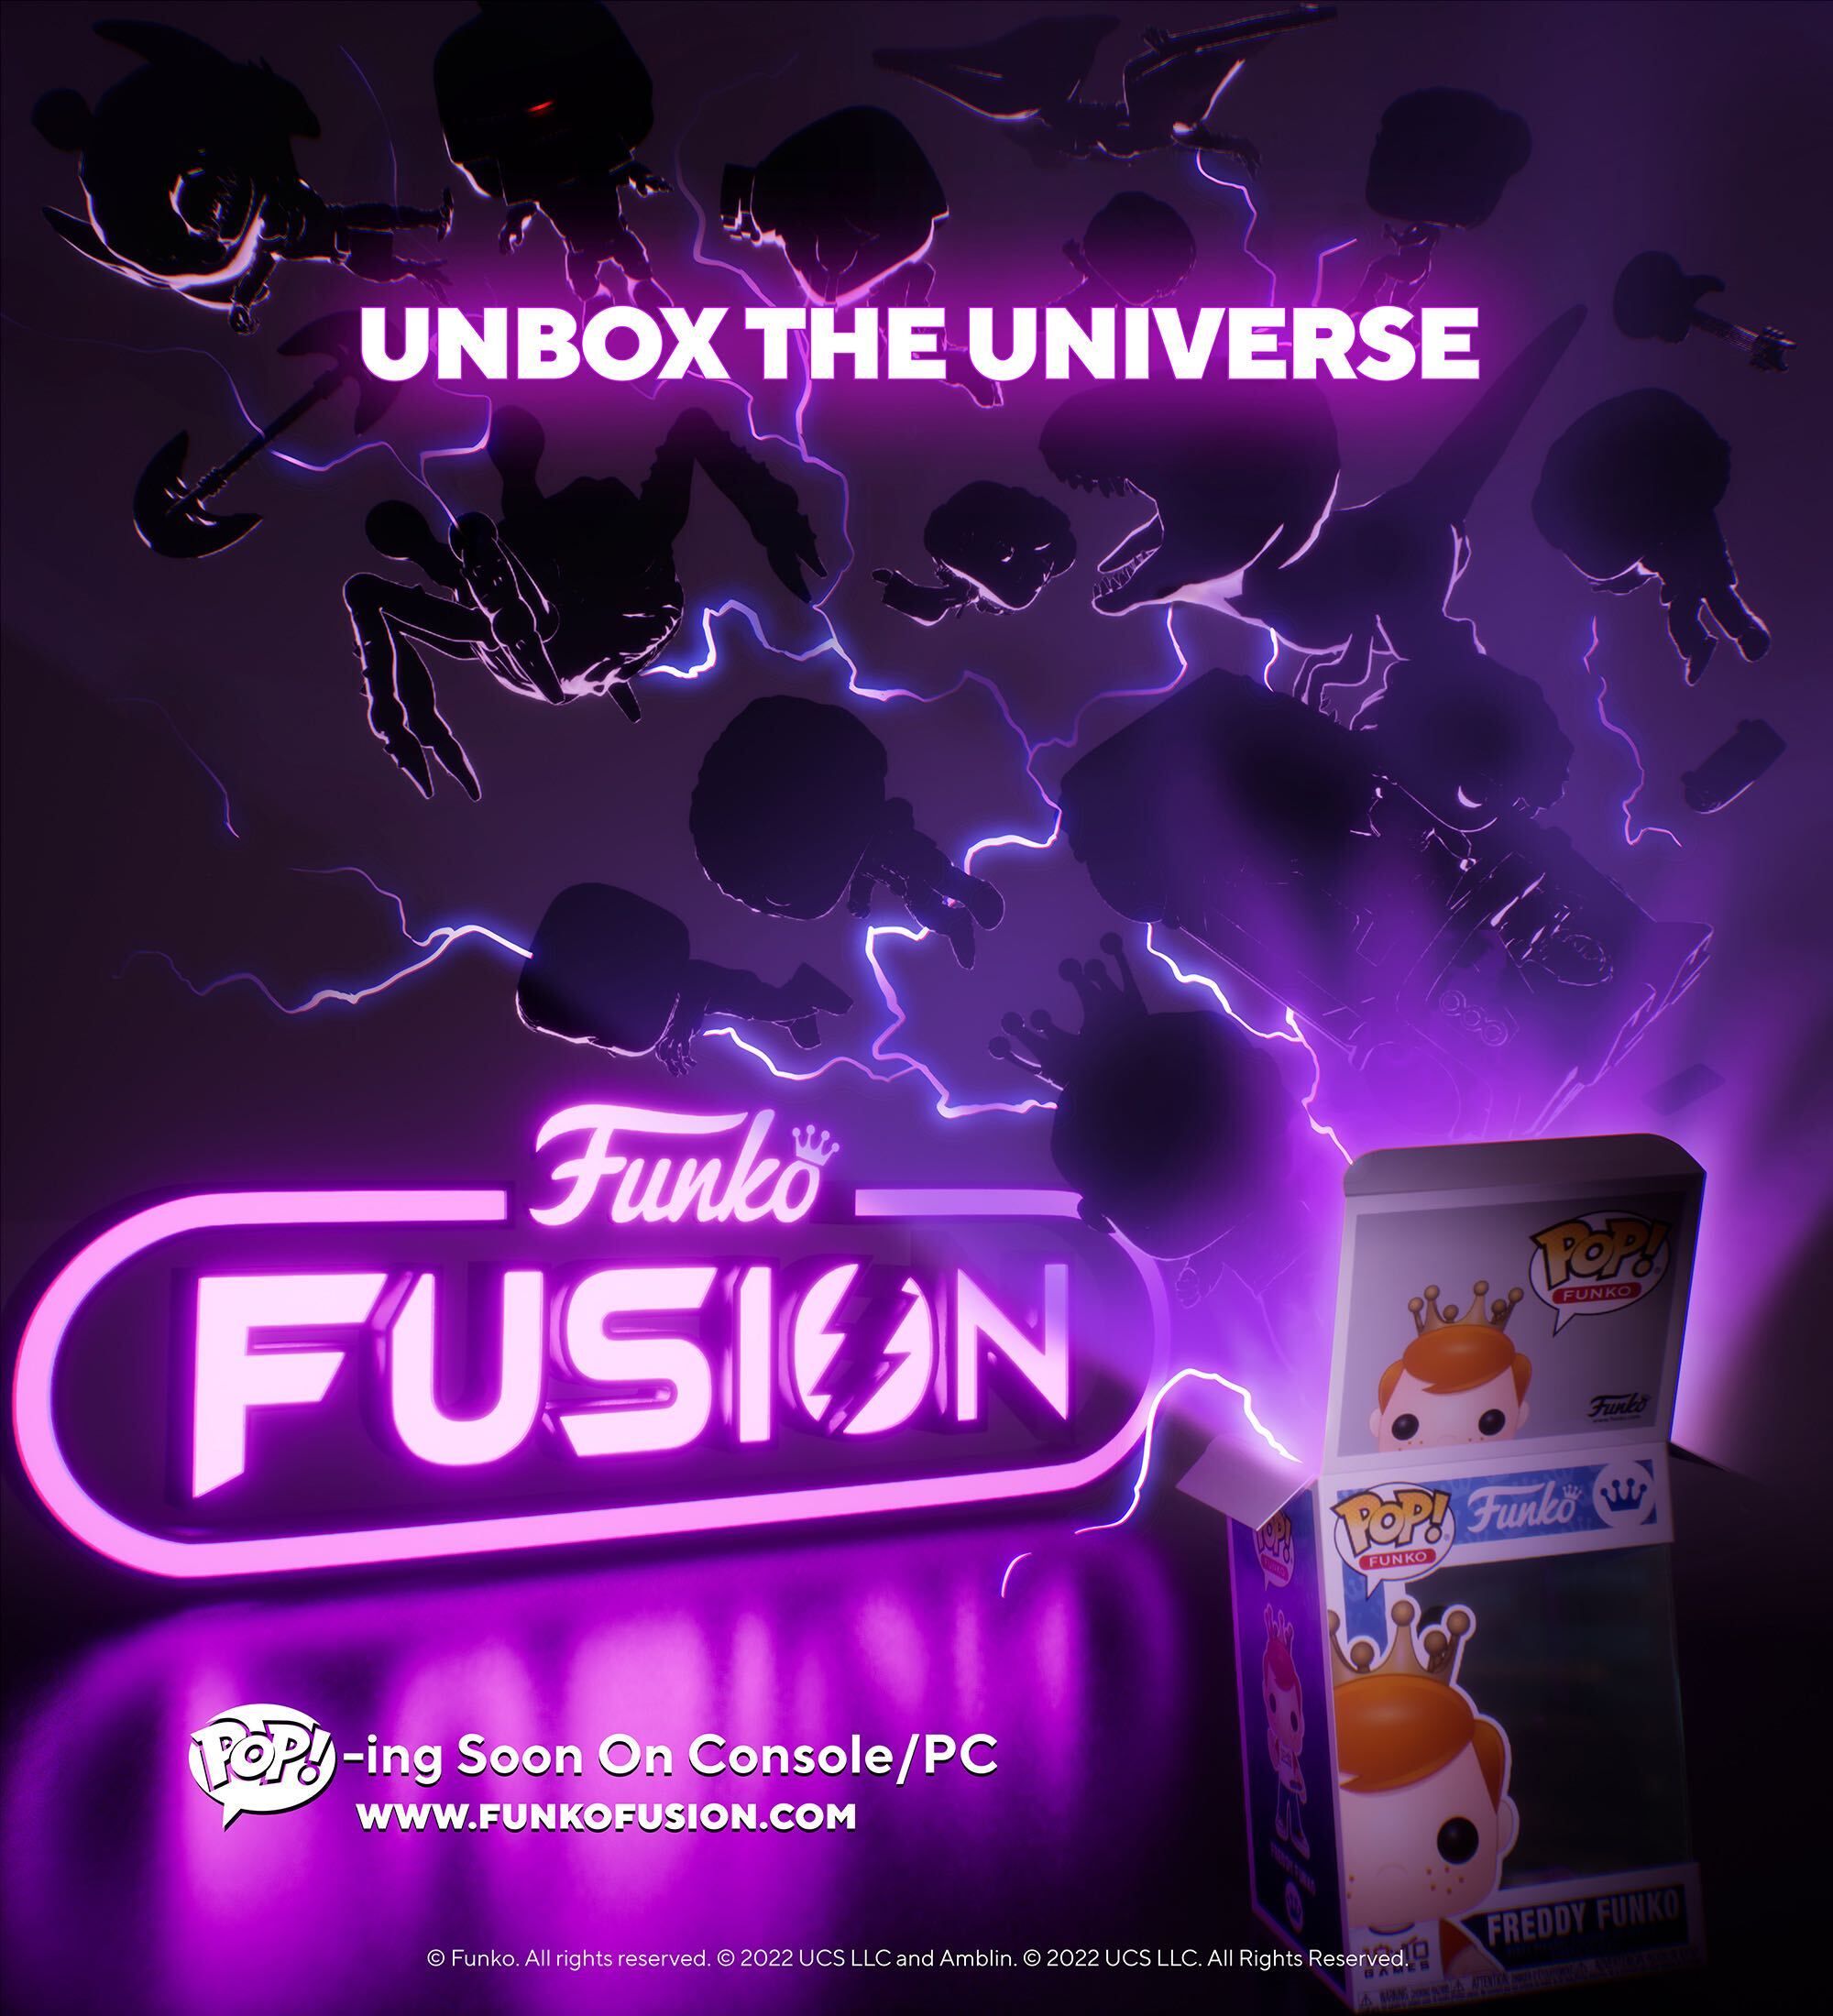 funko fusion image